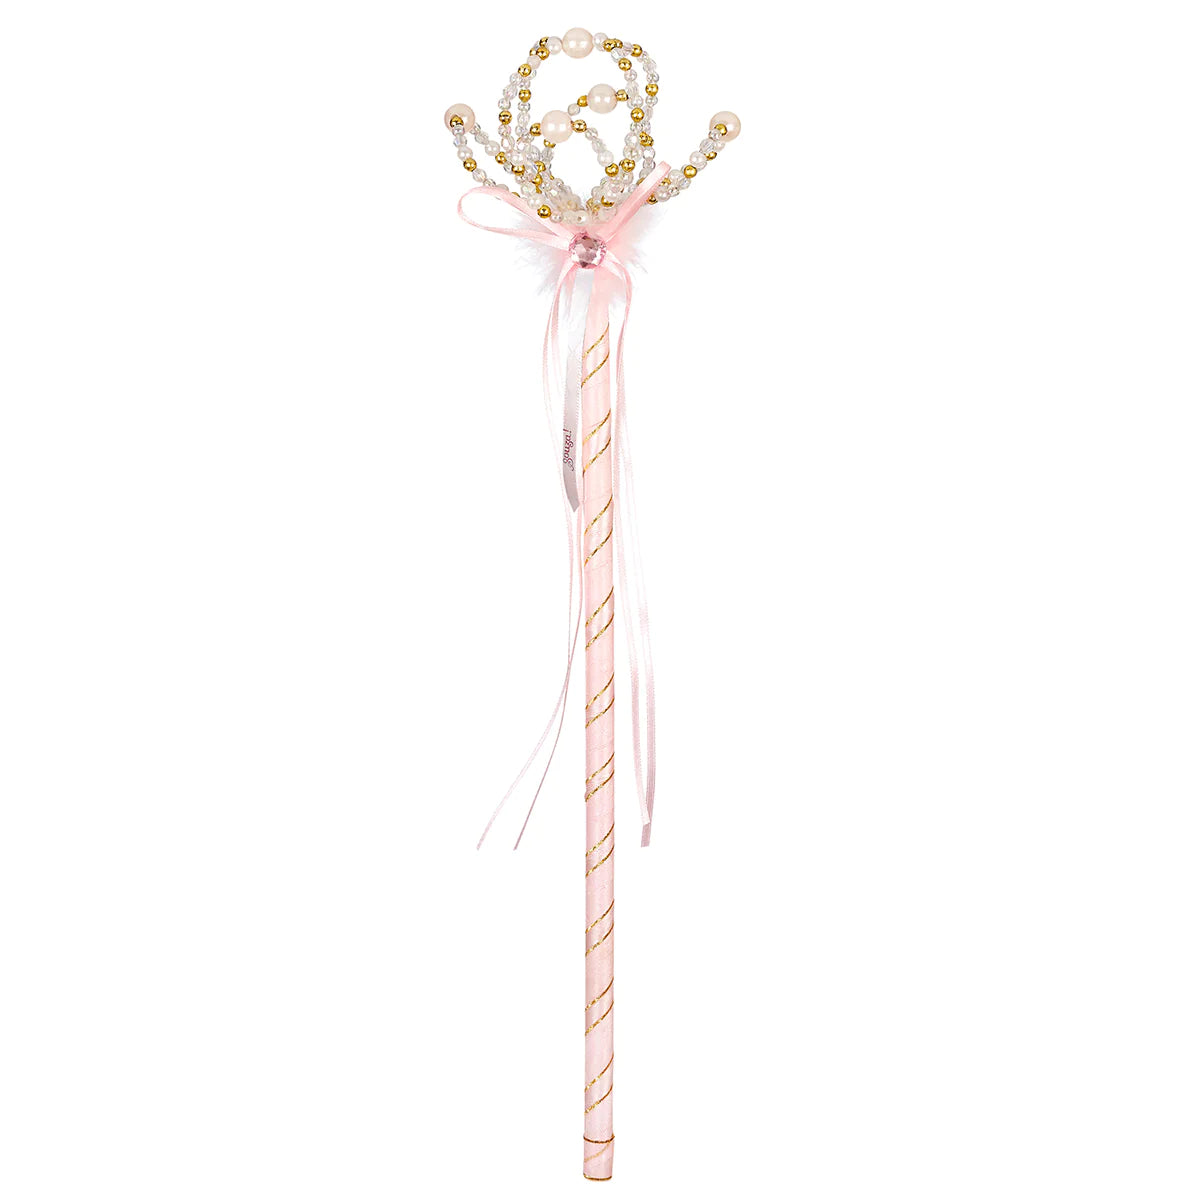 Souza!: Wand with pearls light pink Alexandra